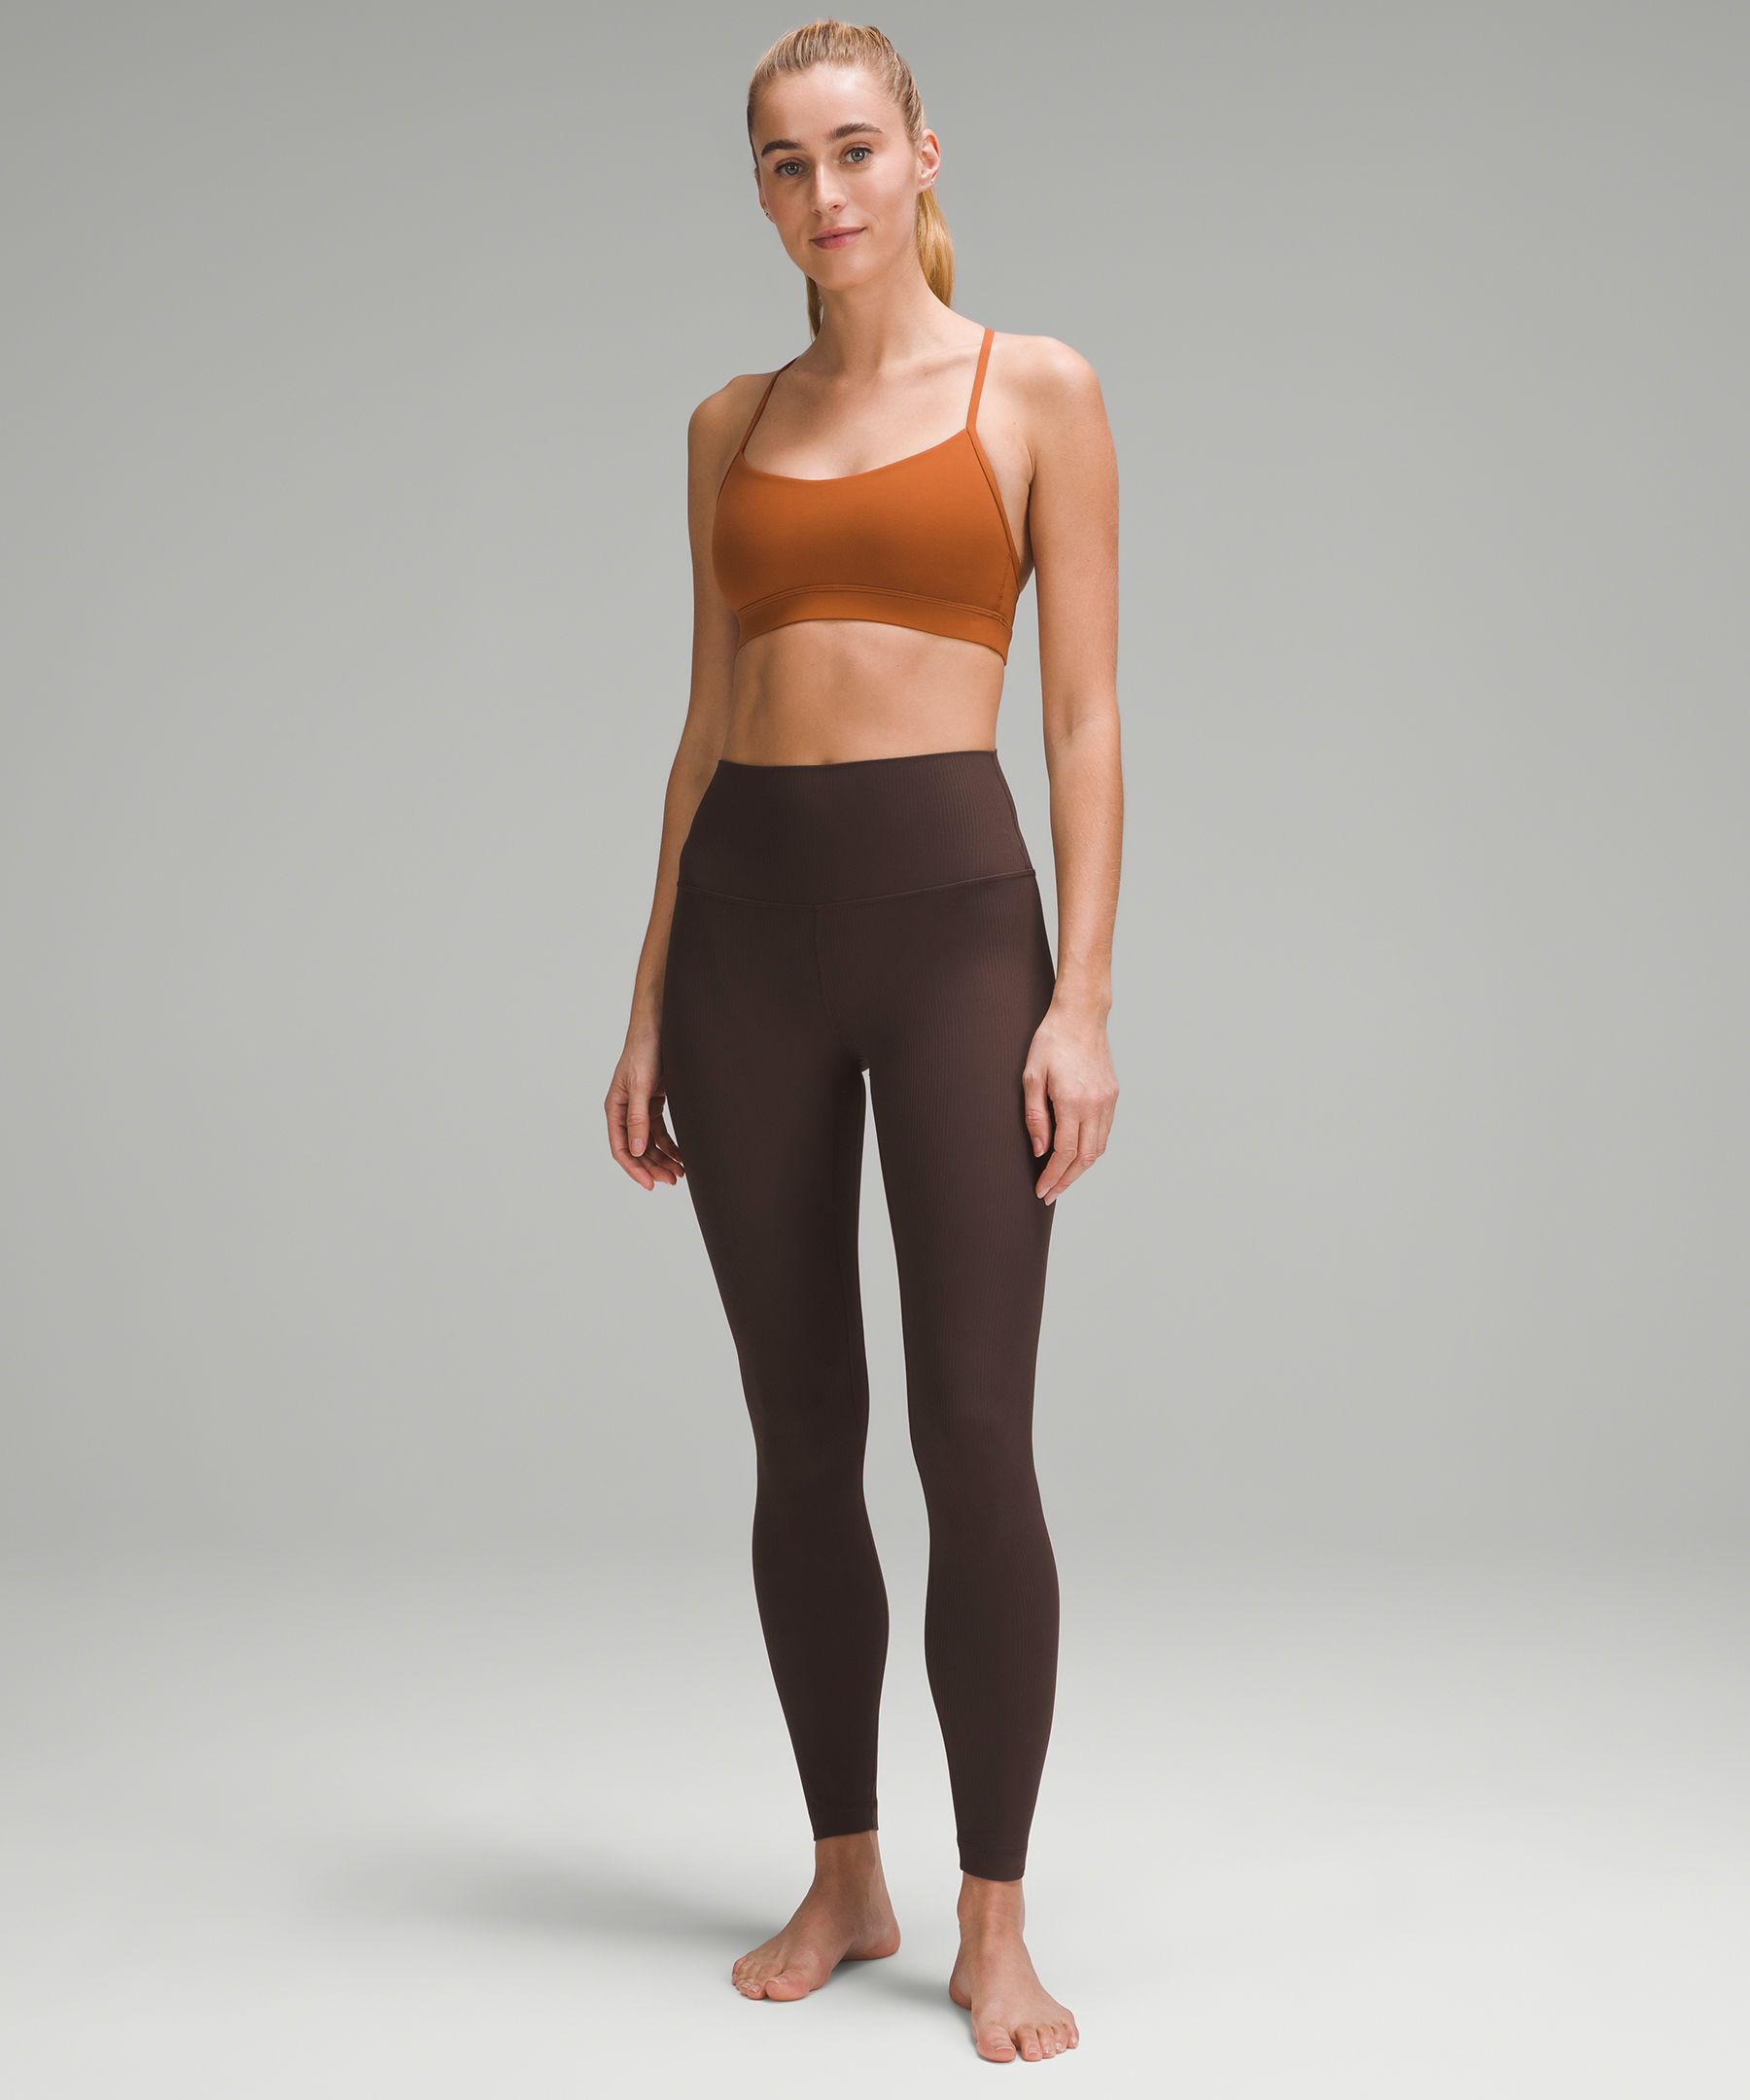 Lumana Leakproof Yoga Pant Leggings, 22 Inseam, Plum, 3X, Single Pair 